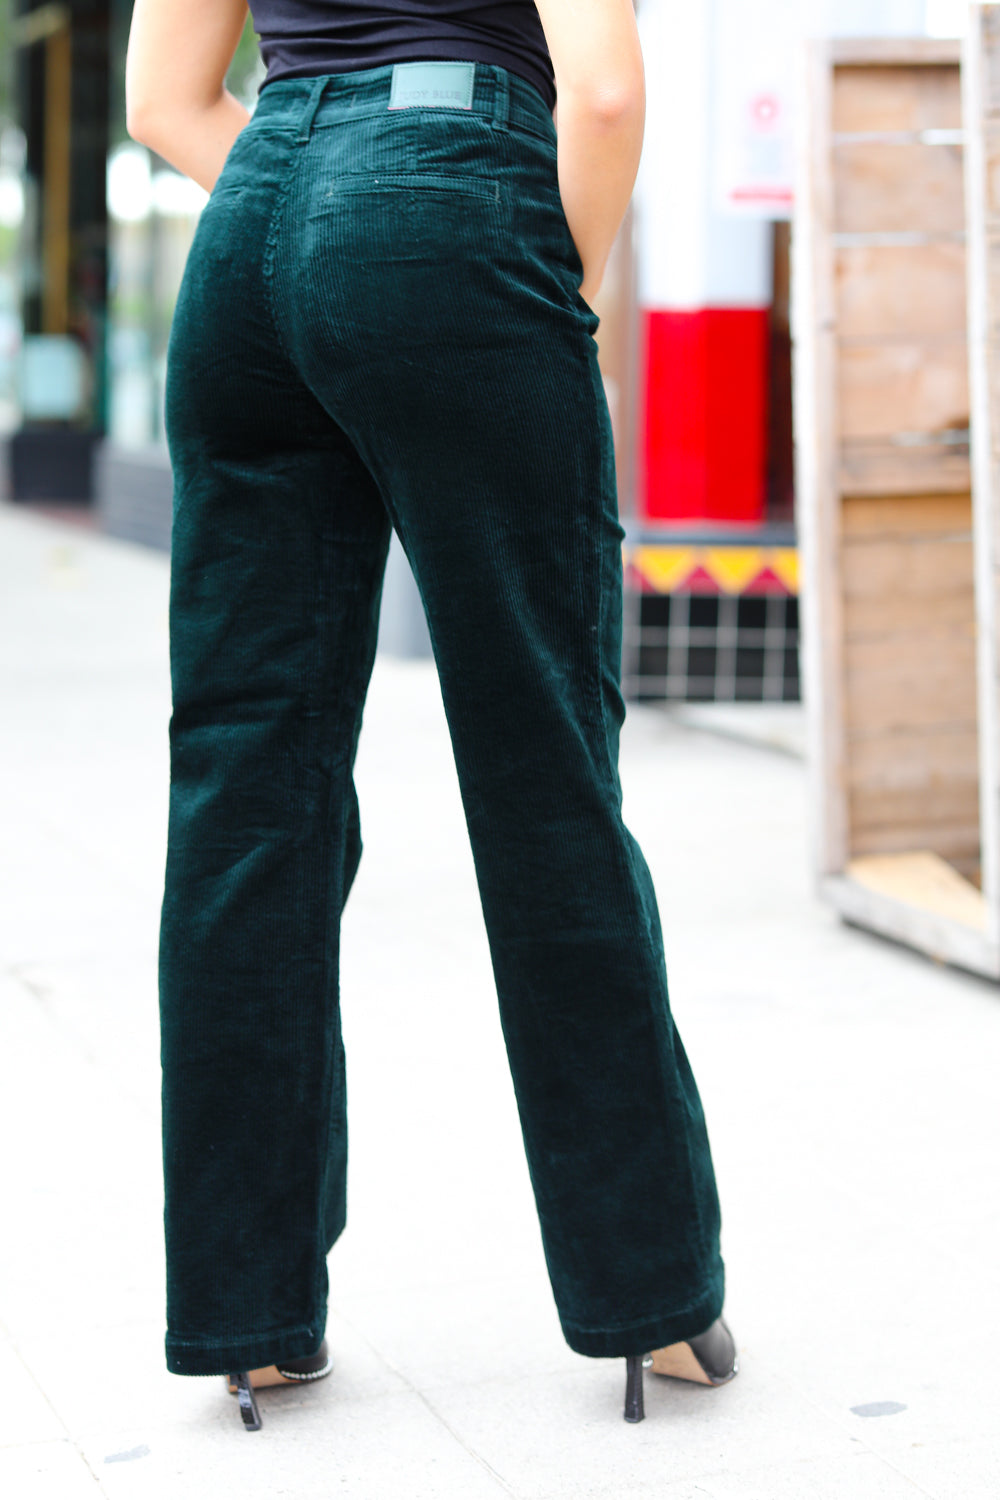 Embrace The Joy Emerald Green Corduroy High Rise Wide Leg Pants - Sybaritic Bags & Clothing